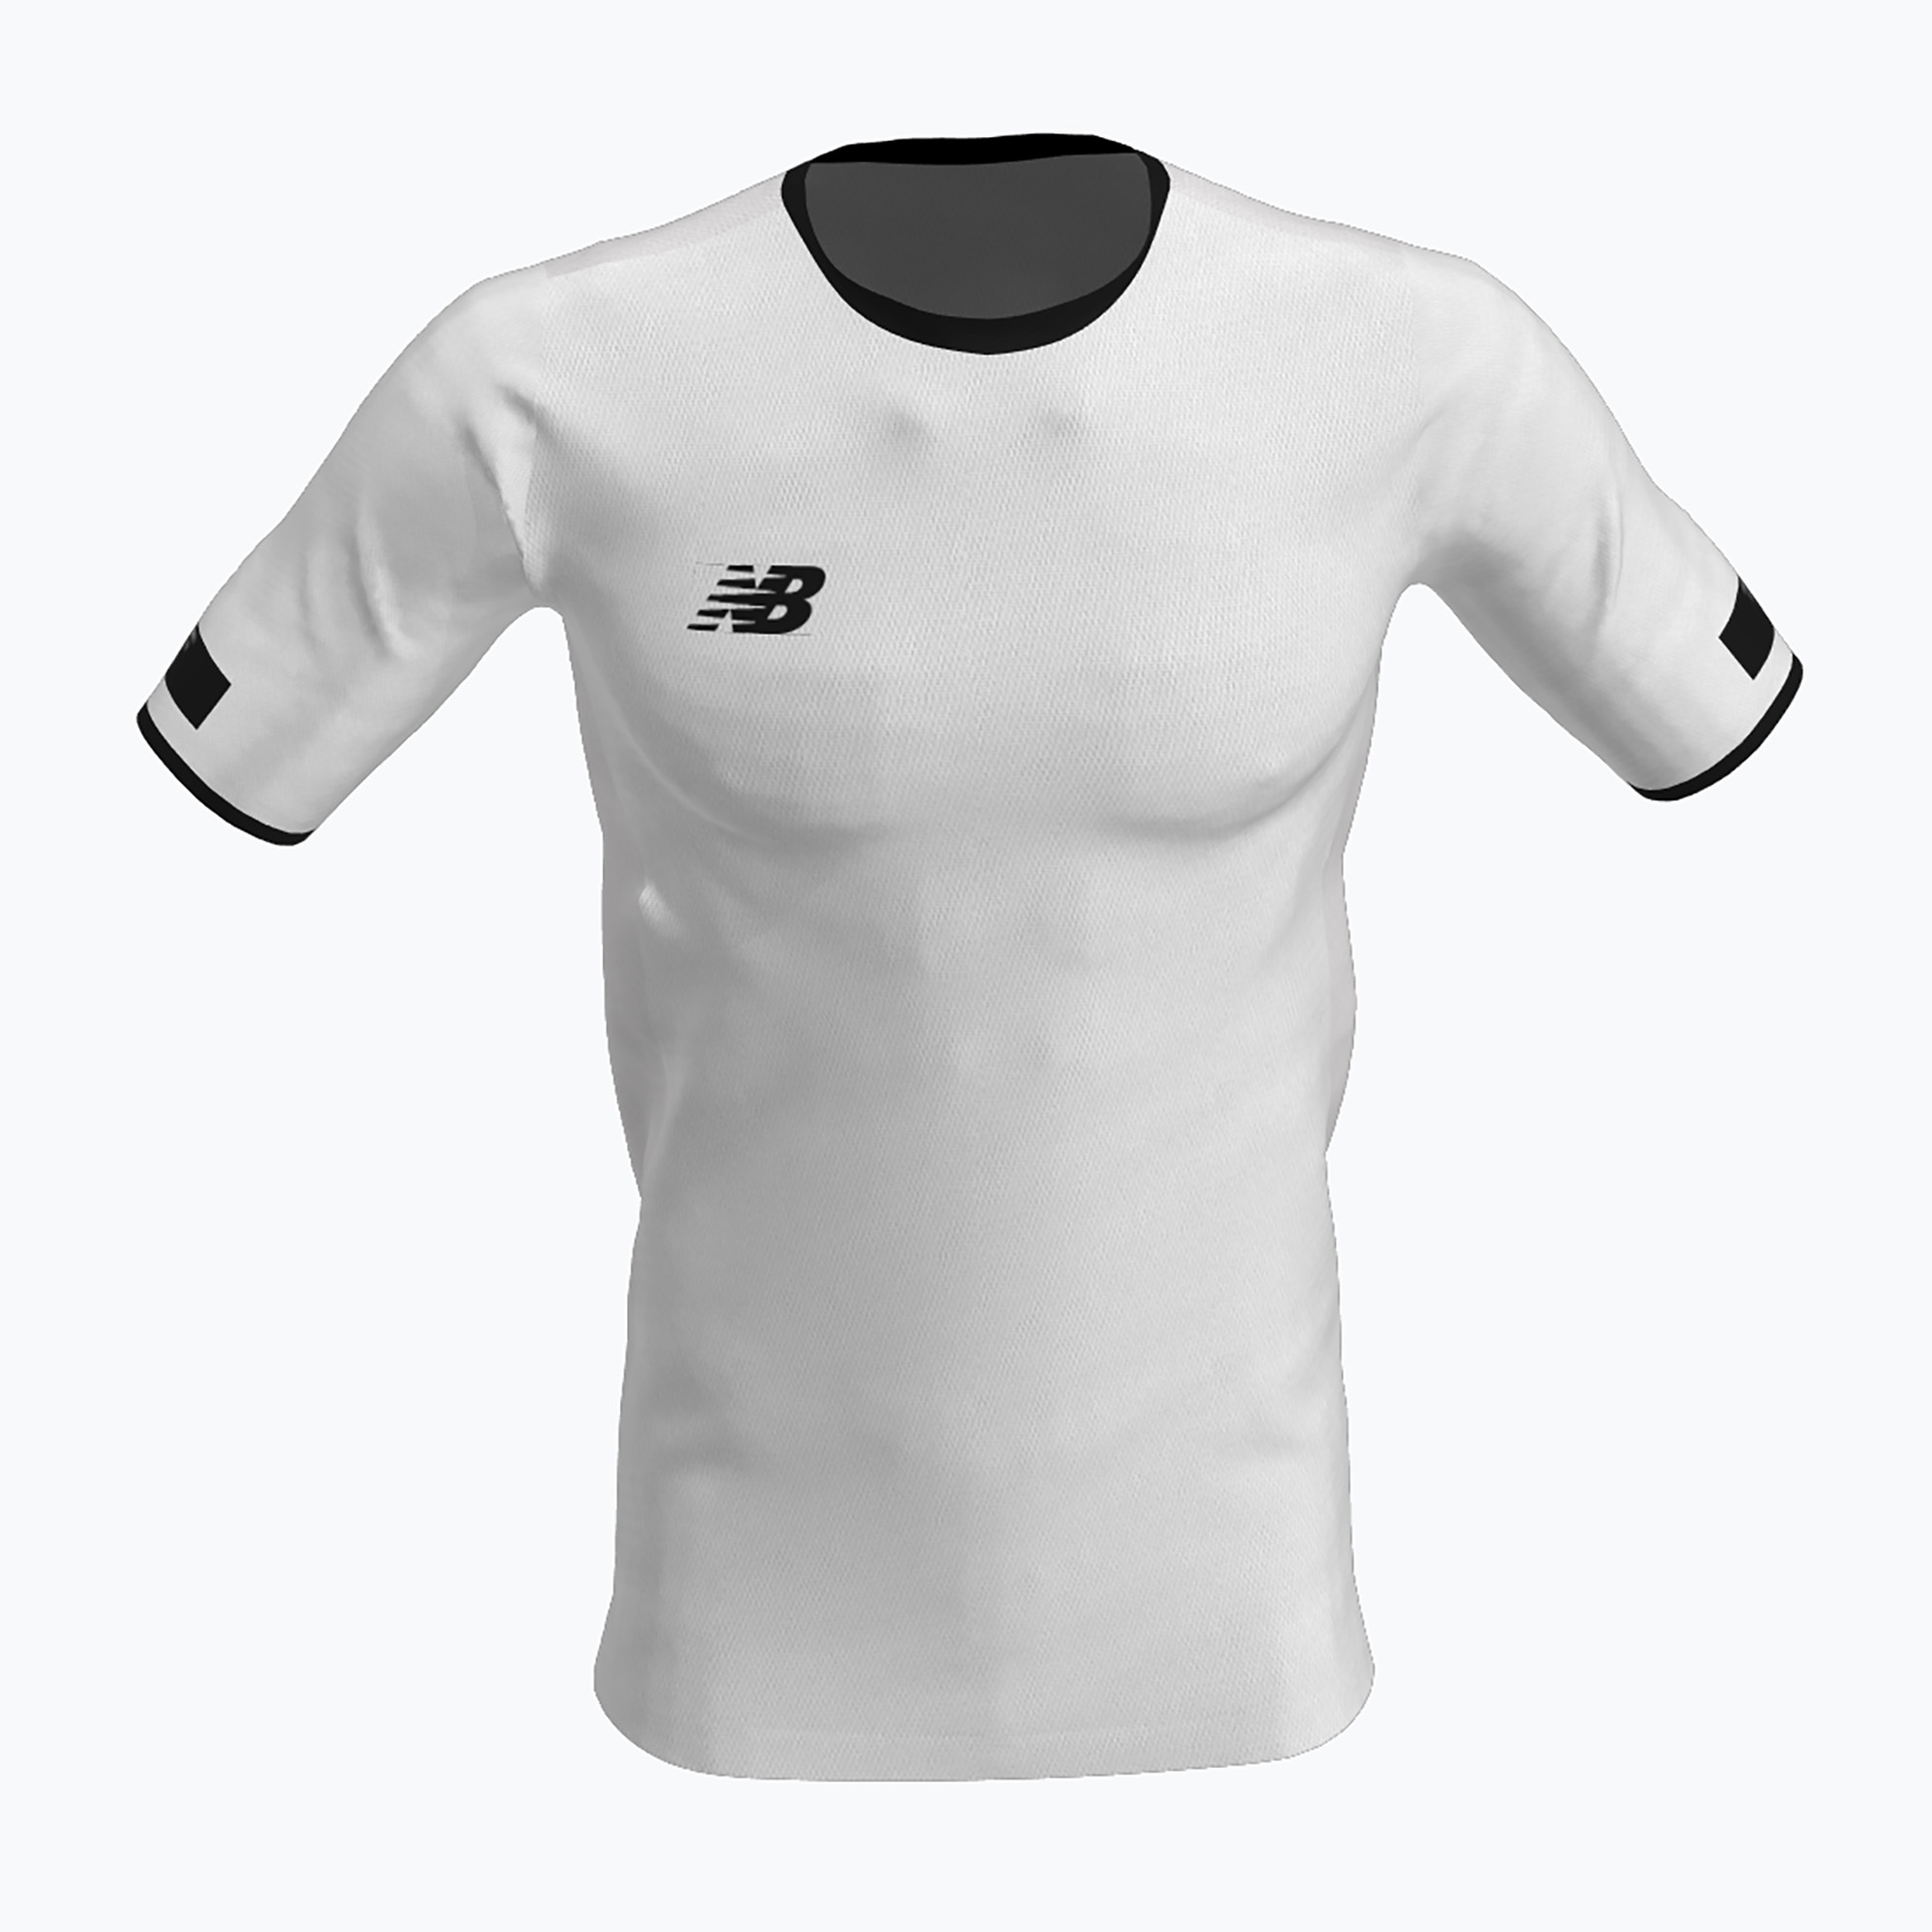 New Balance Turf pánske futbalové tričko biele NBEMT9018